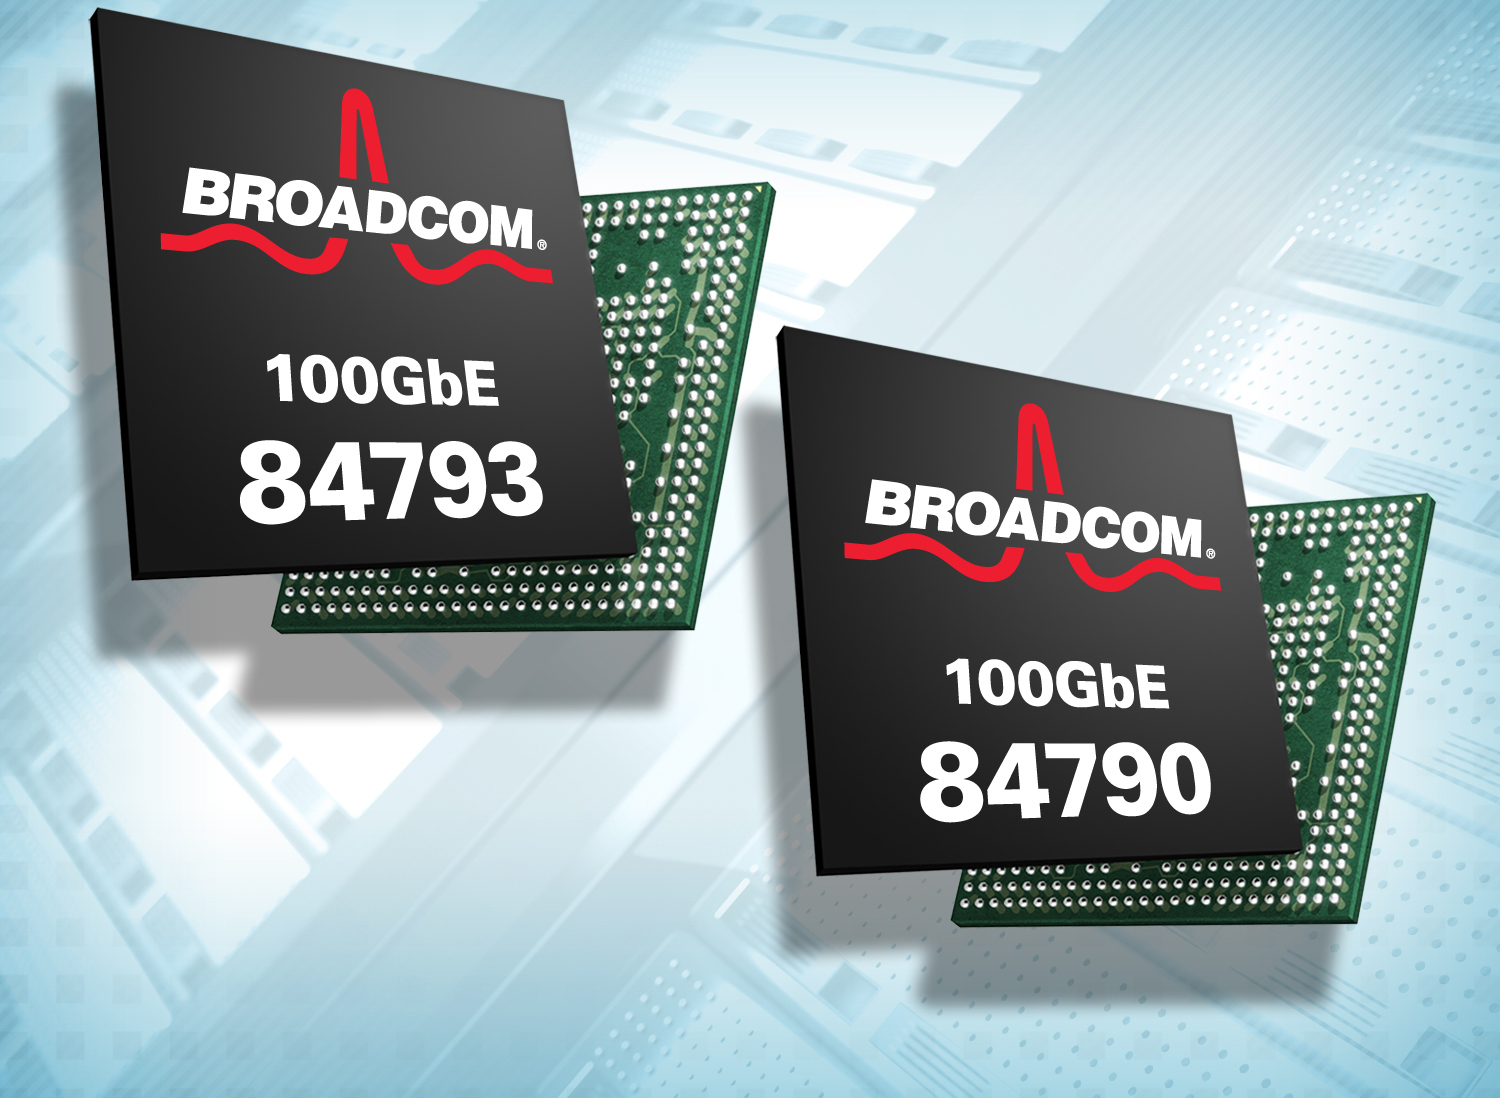 Broadcom liefert gemischte Q1-Ergebnisse